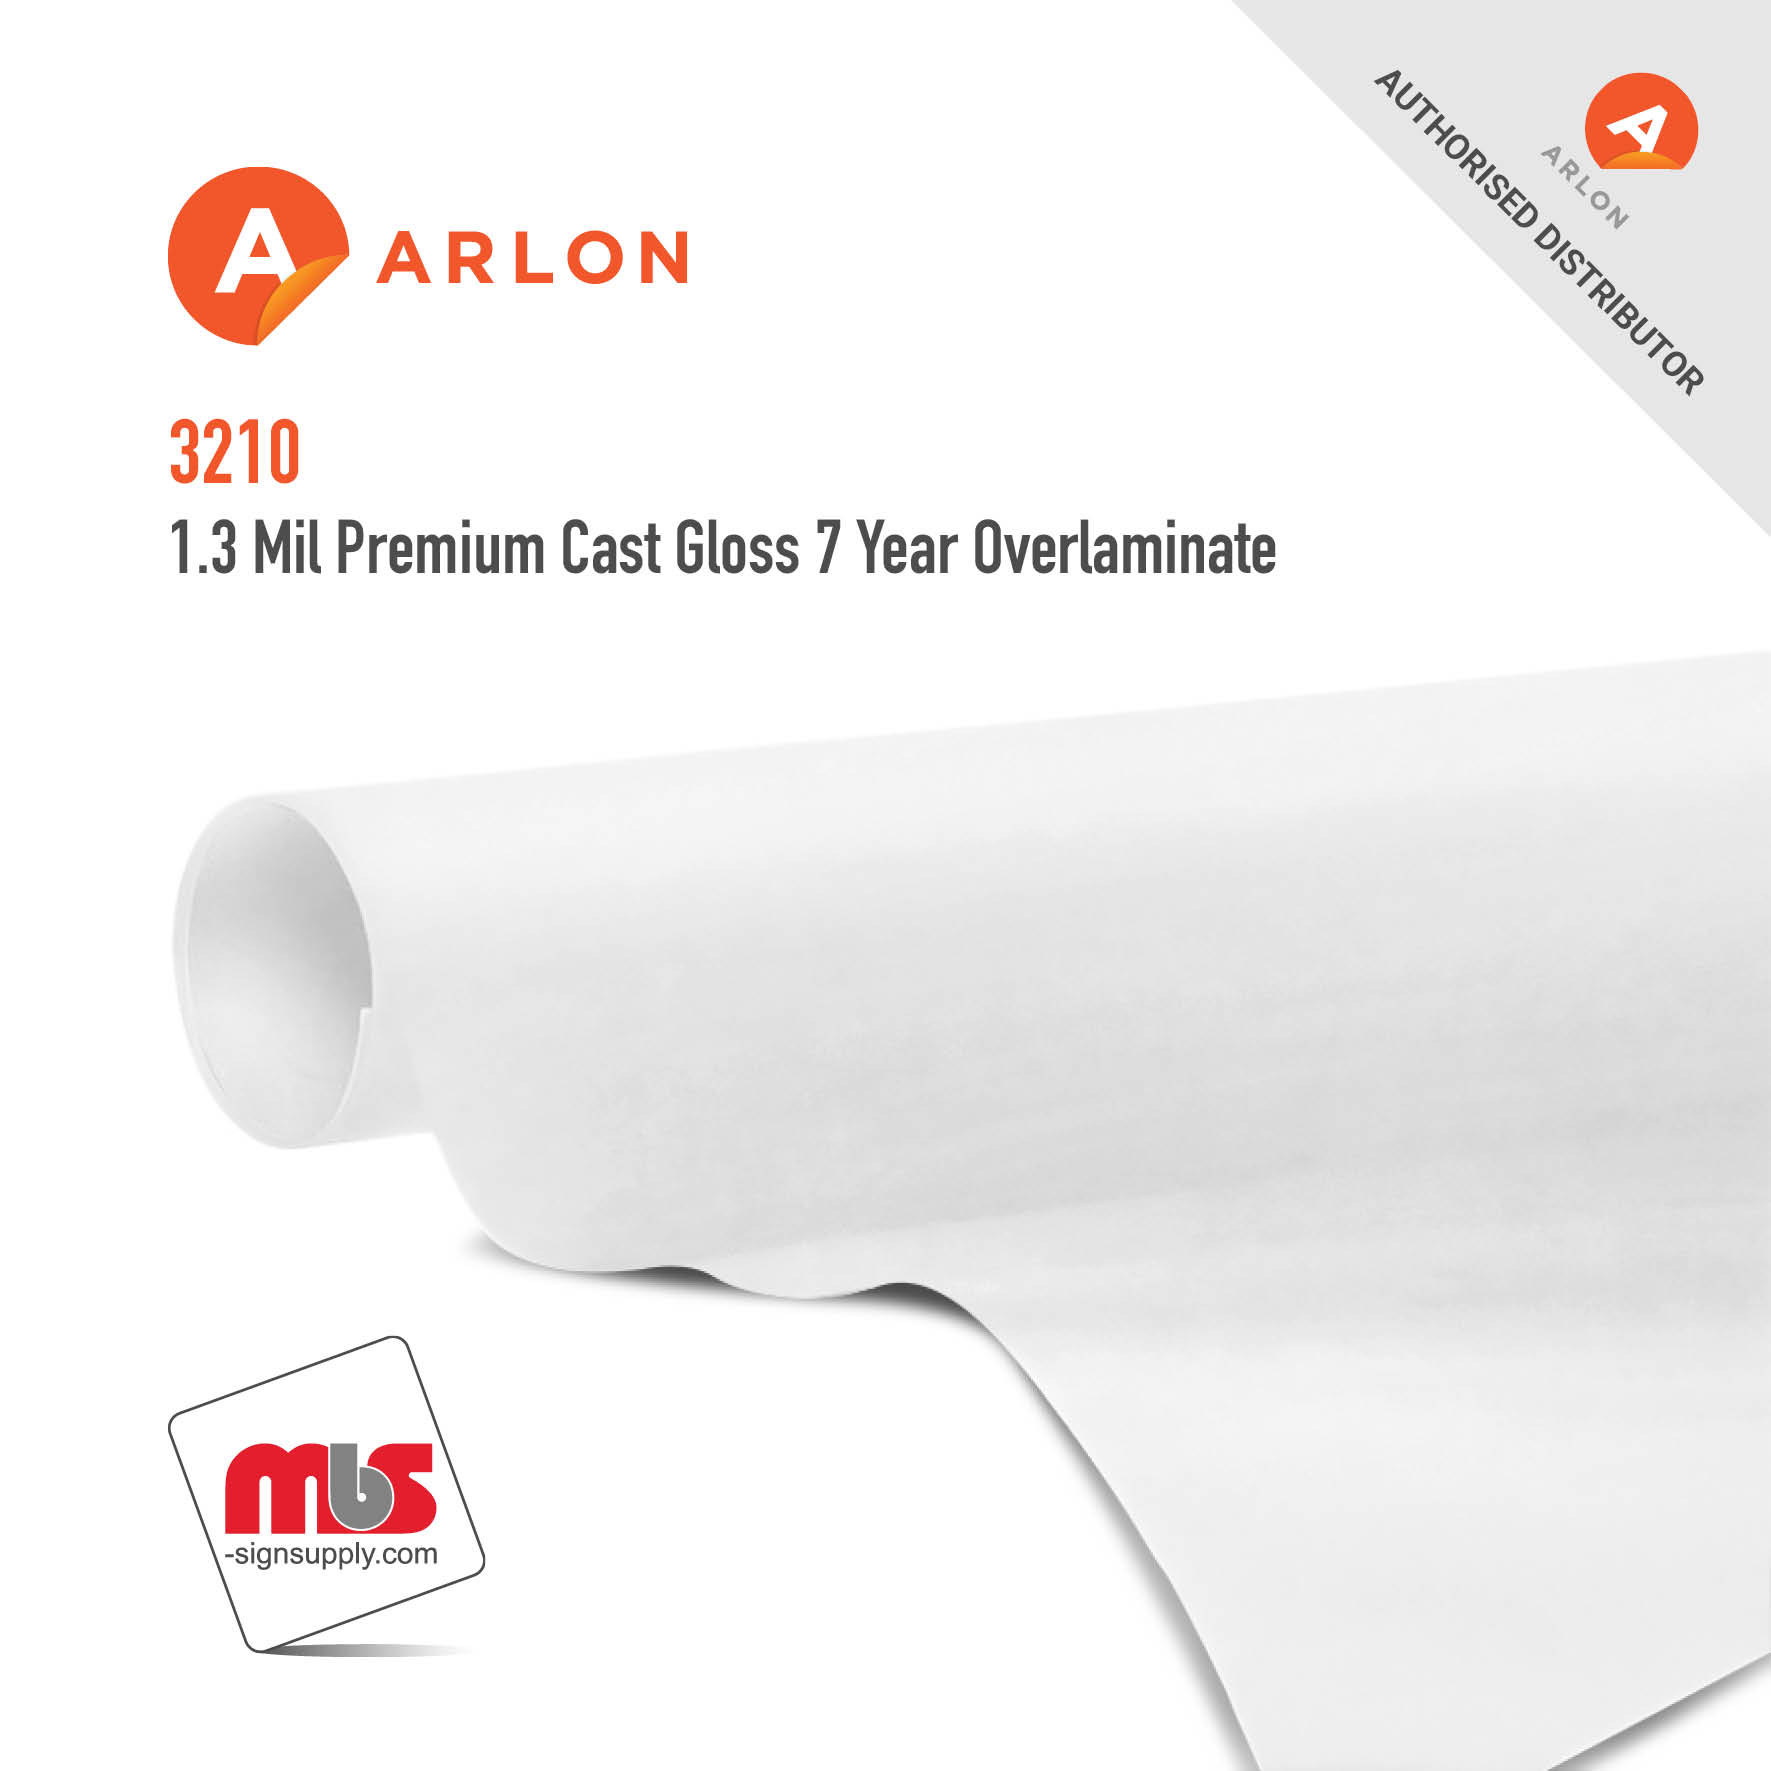 54'' x 50 Yard Roll - Arlon 3710 1.3 Mil Premium Cast Gloss 7 Year Overlaminate